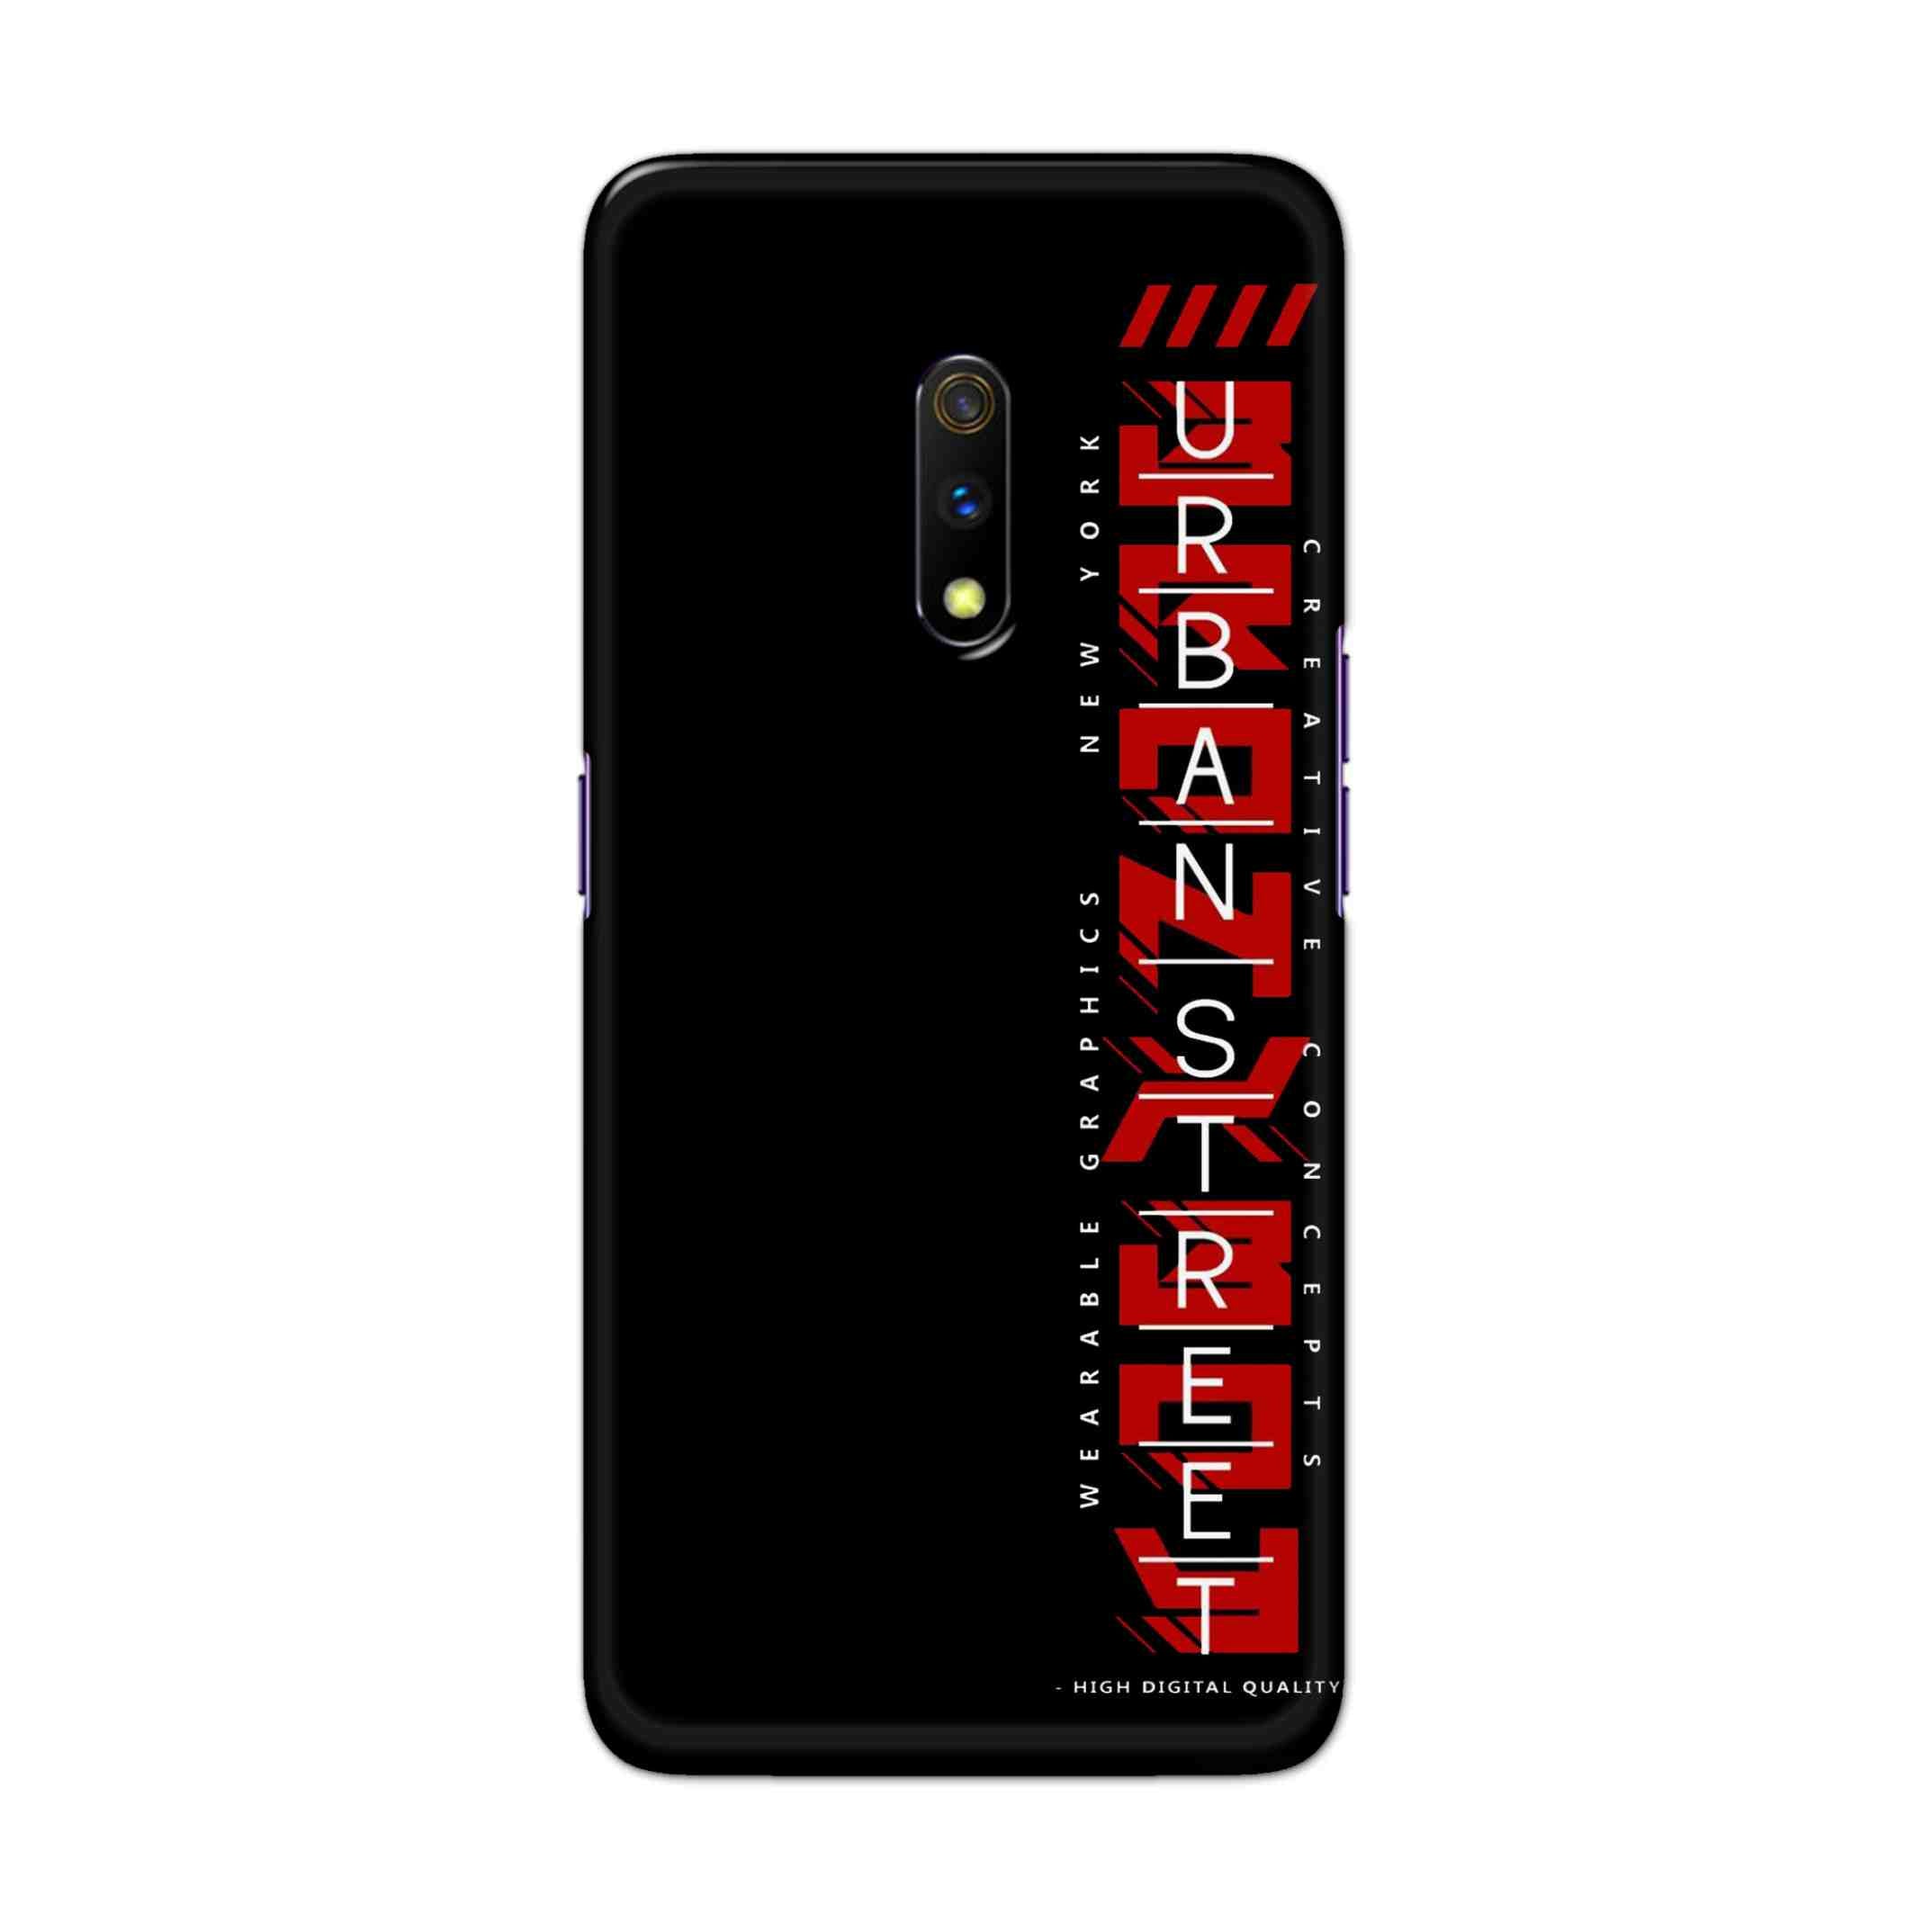 Buy Urban Street Hard Back Mobile Phone Case Cover For Oppo Realme X Online